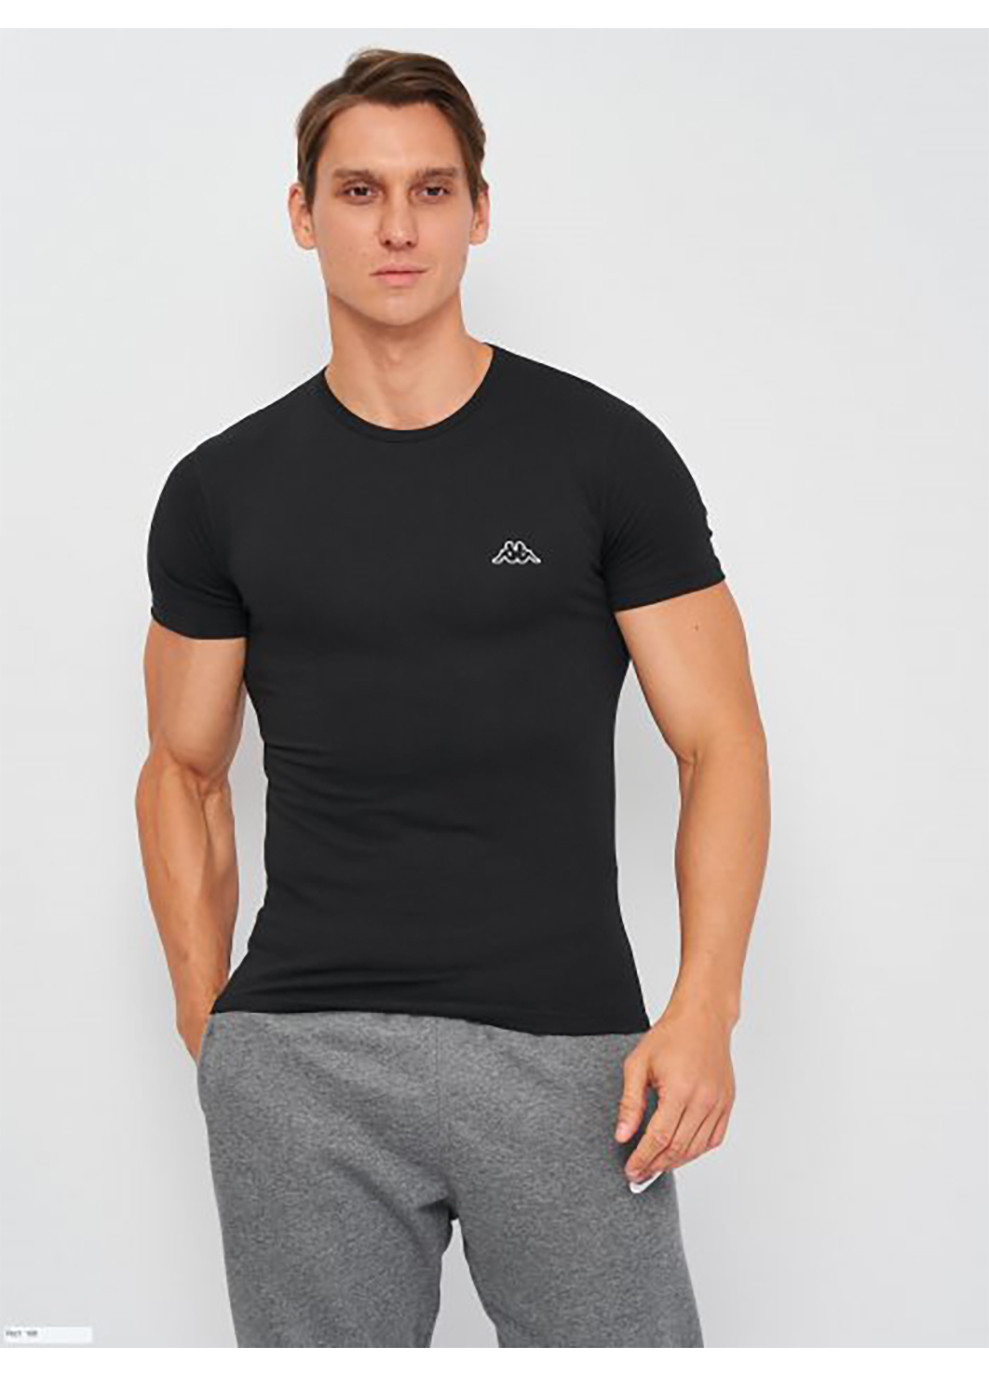 Черная футболка t-shirt mezza manica girocollo черный муж 2xl k1305 nero 2xl Kappa